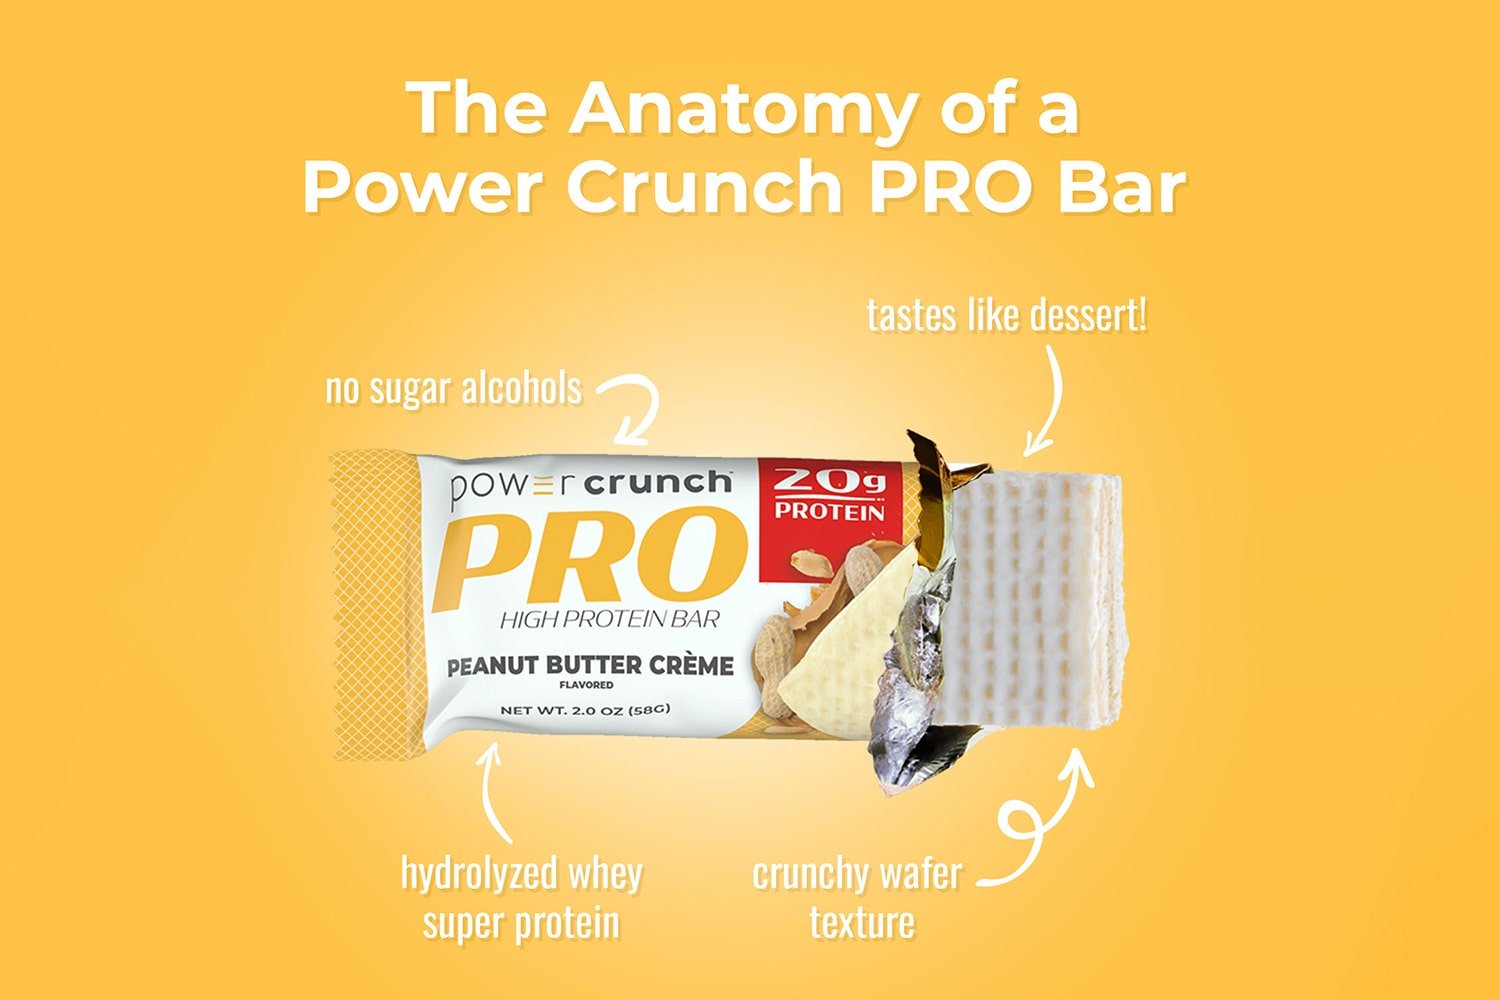 Anatomy of a Power Crunch PRO Peanut Butter bar with hydrolyzed whey protein, crunchy wafers